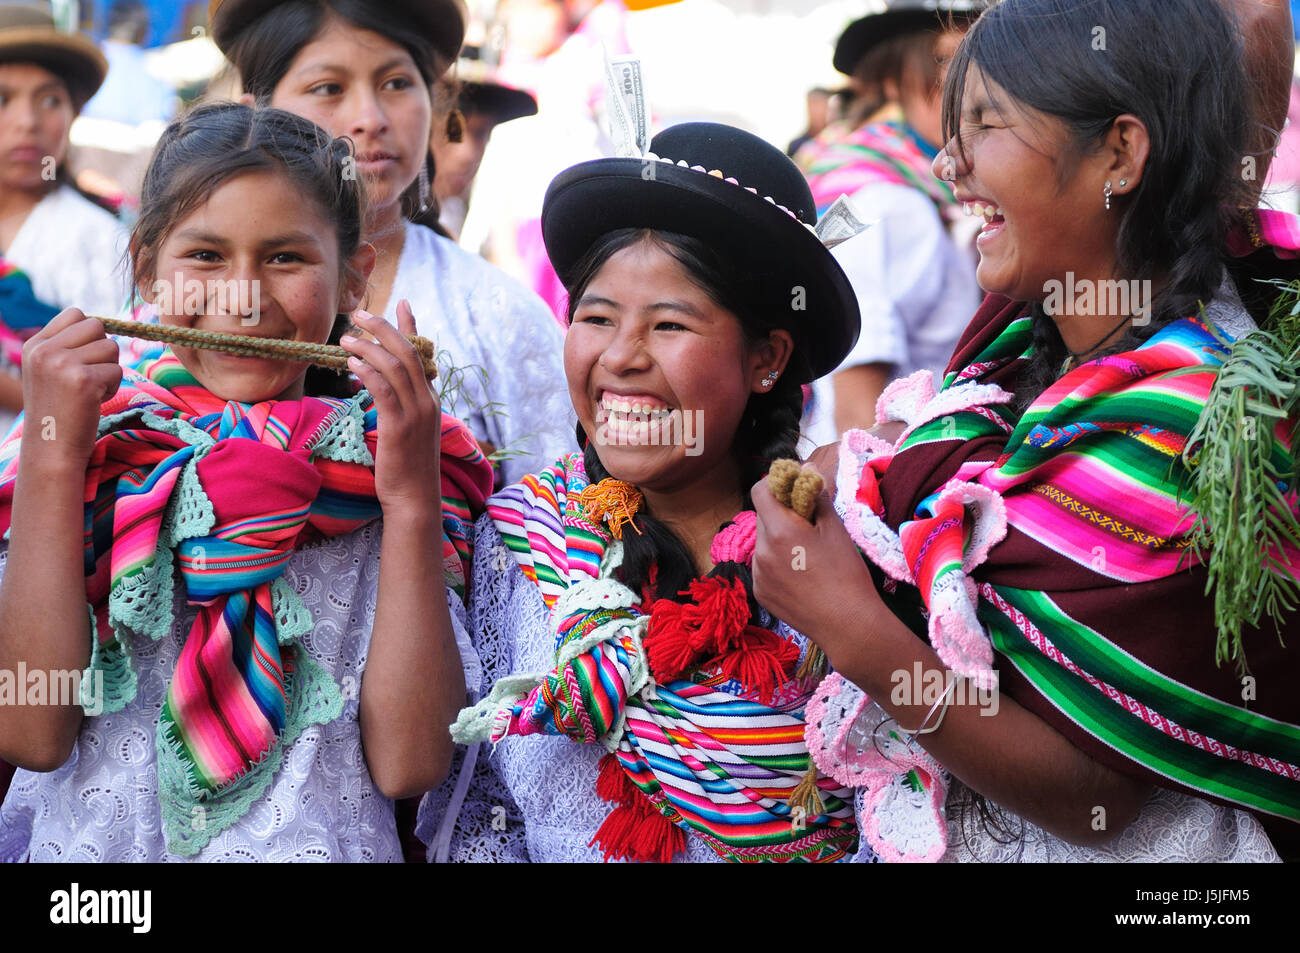 SUCRE, Bolivien - 10 SEPTEMBER: Fiesta De La Virgen de Guadalupe in Sucre. Jungen Teilnehmer in die Tanzparade in Sucre am 10. September 2011 Stockfoto